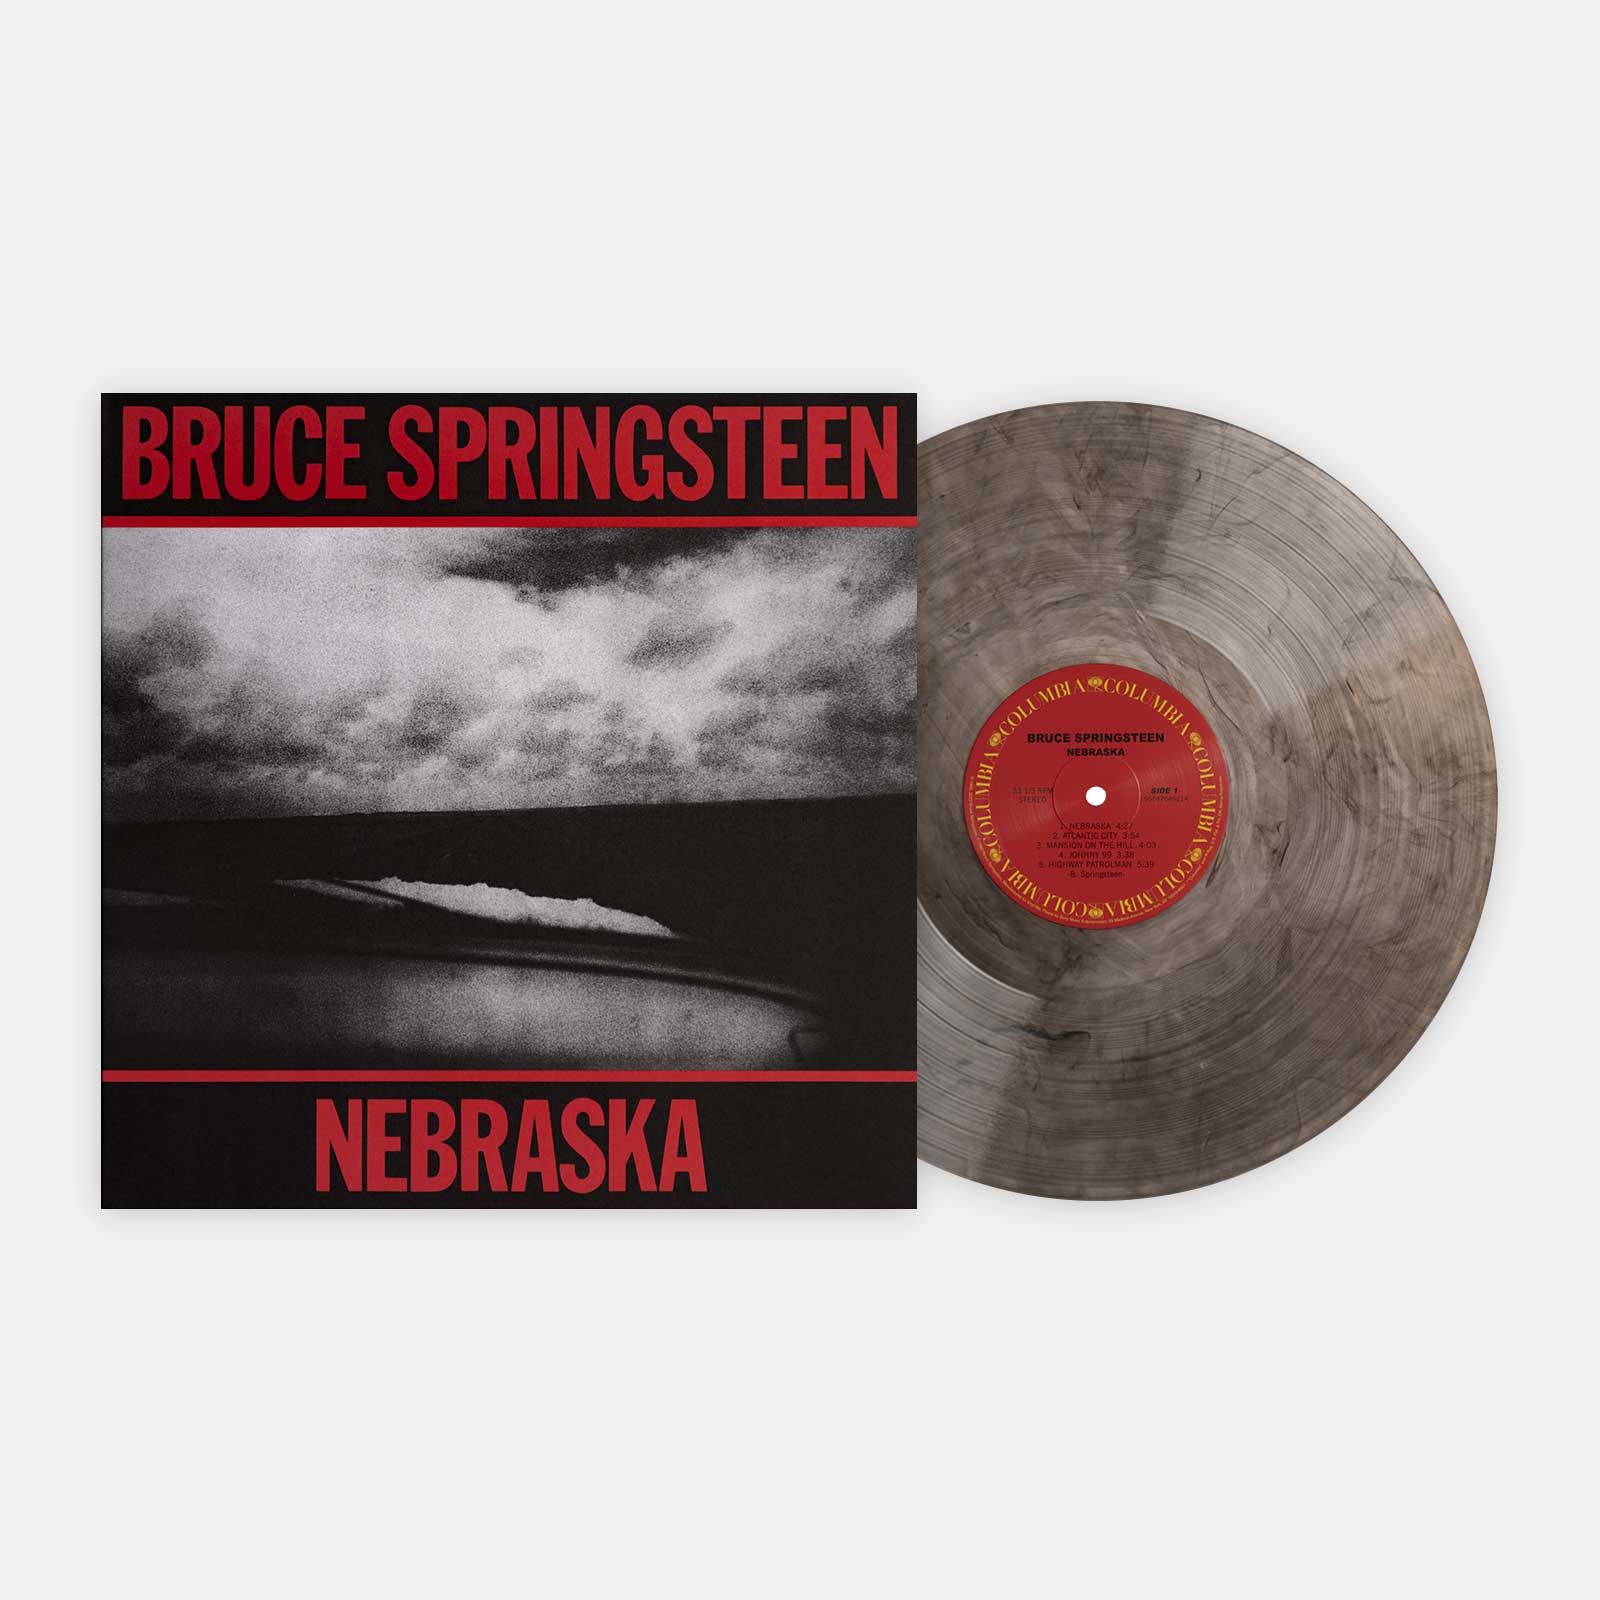 Bruce Springsteen 'Nebraska' - Me, Please